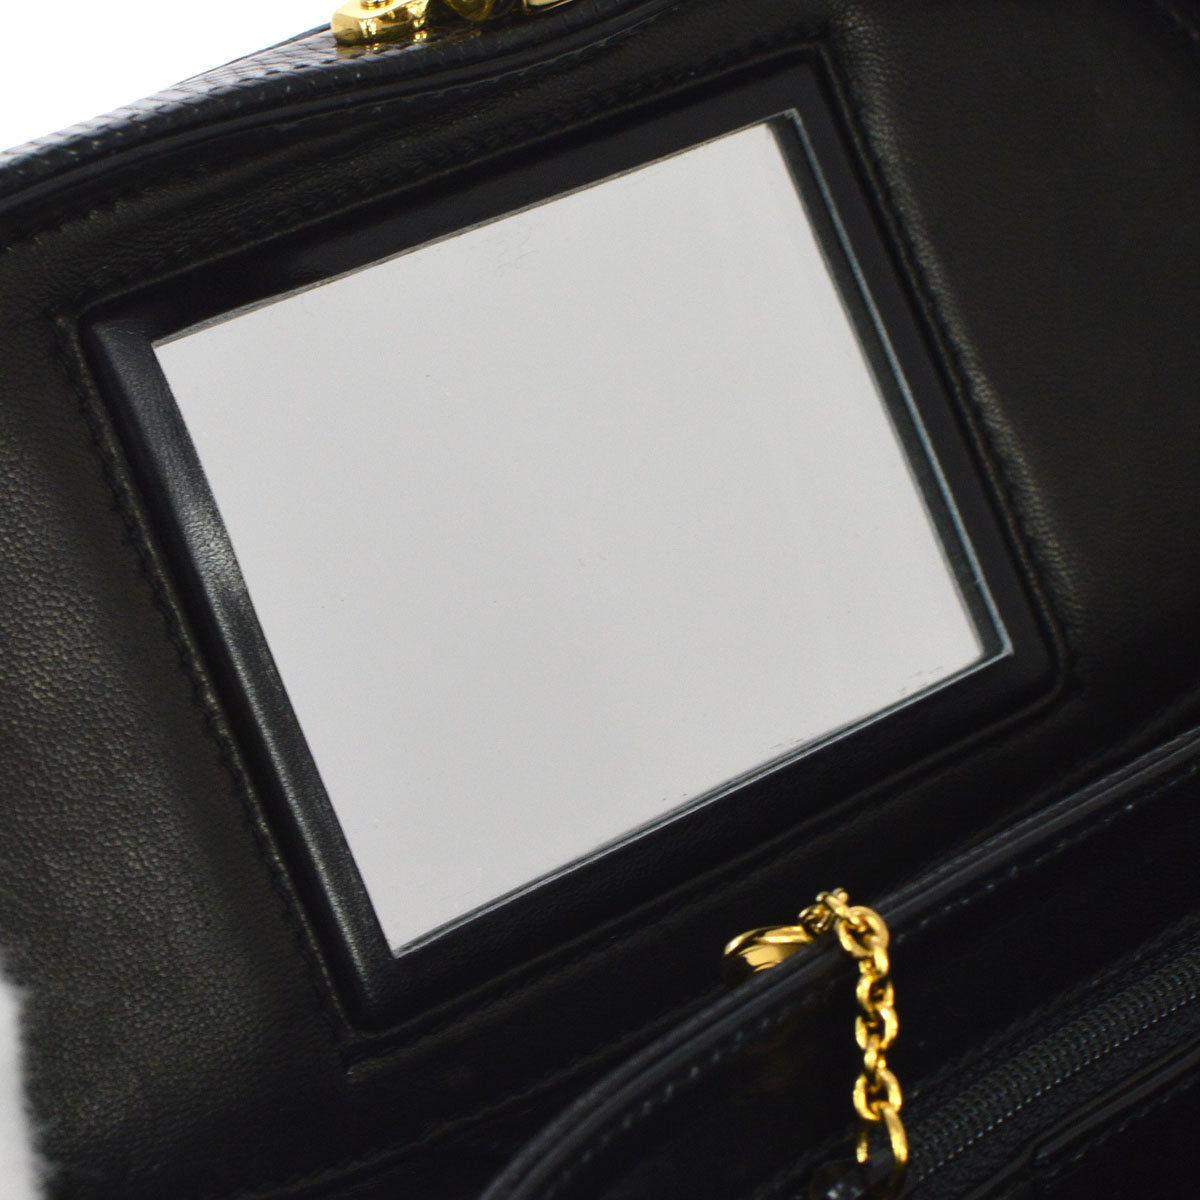 Gucci Black Lizard Leather Top Handle Satchel Vanity Style Mini Small Bag 2